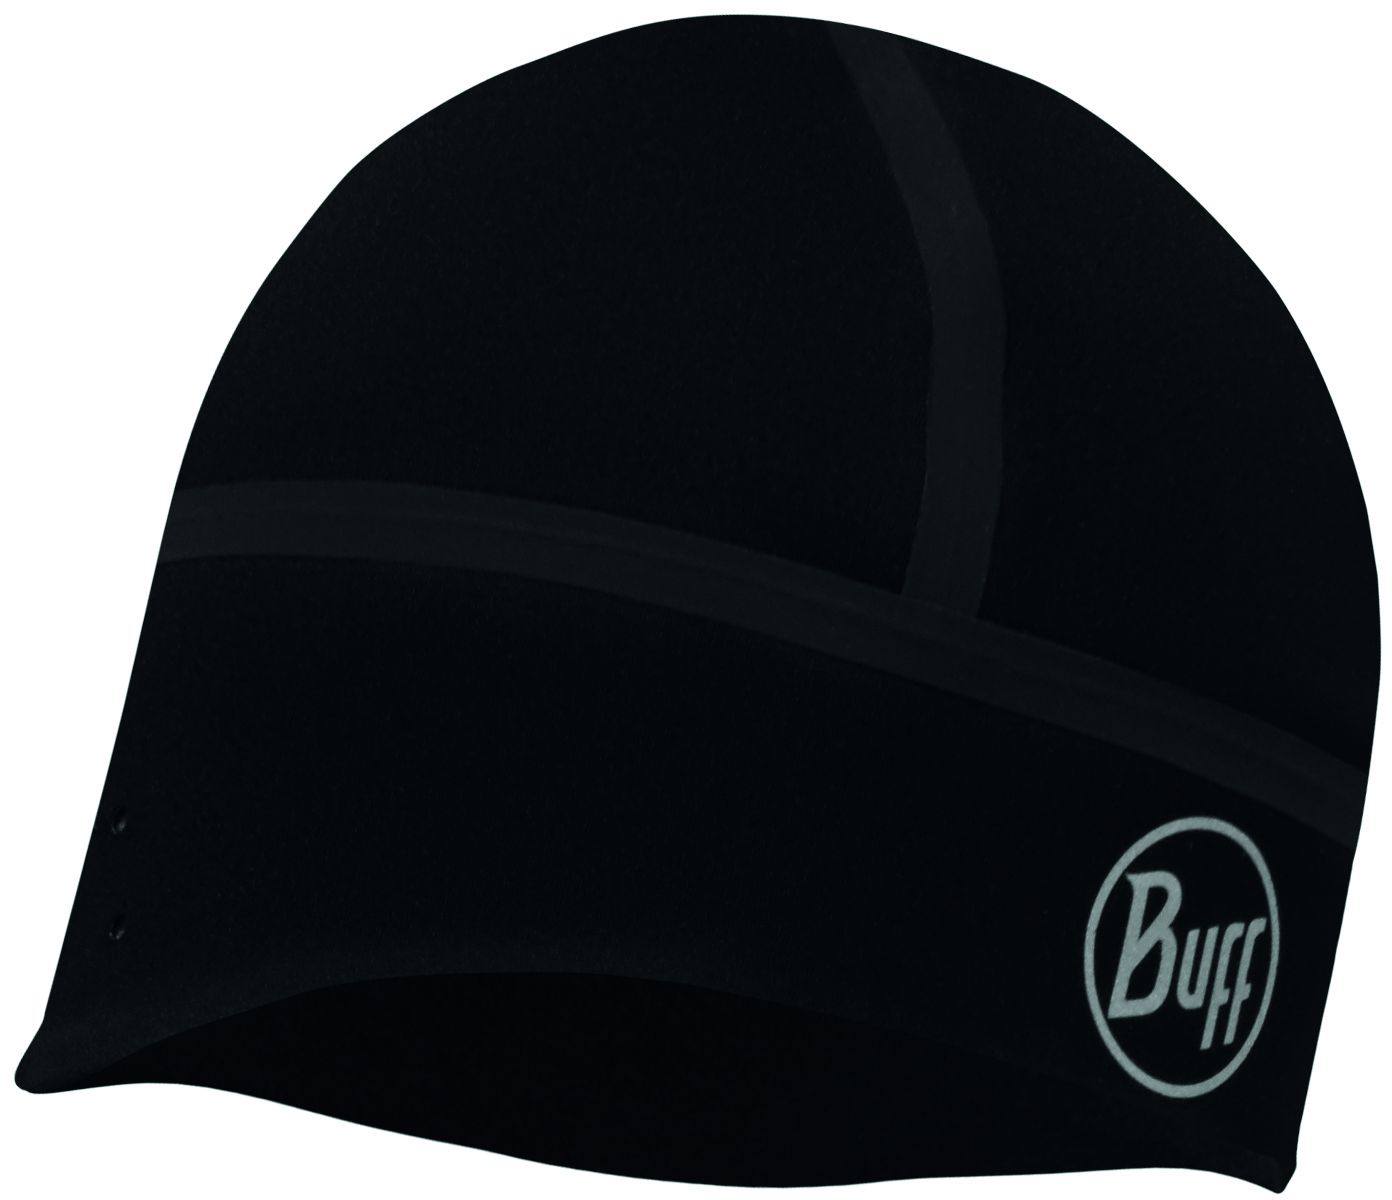 Buff Original Buff Windproof Tech Fleece Hat in schwarz oder blau Windschutz! 